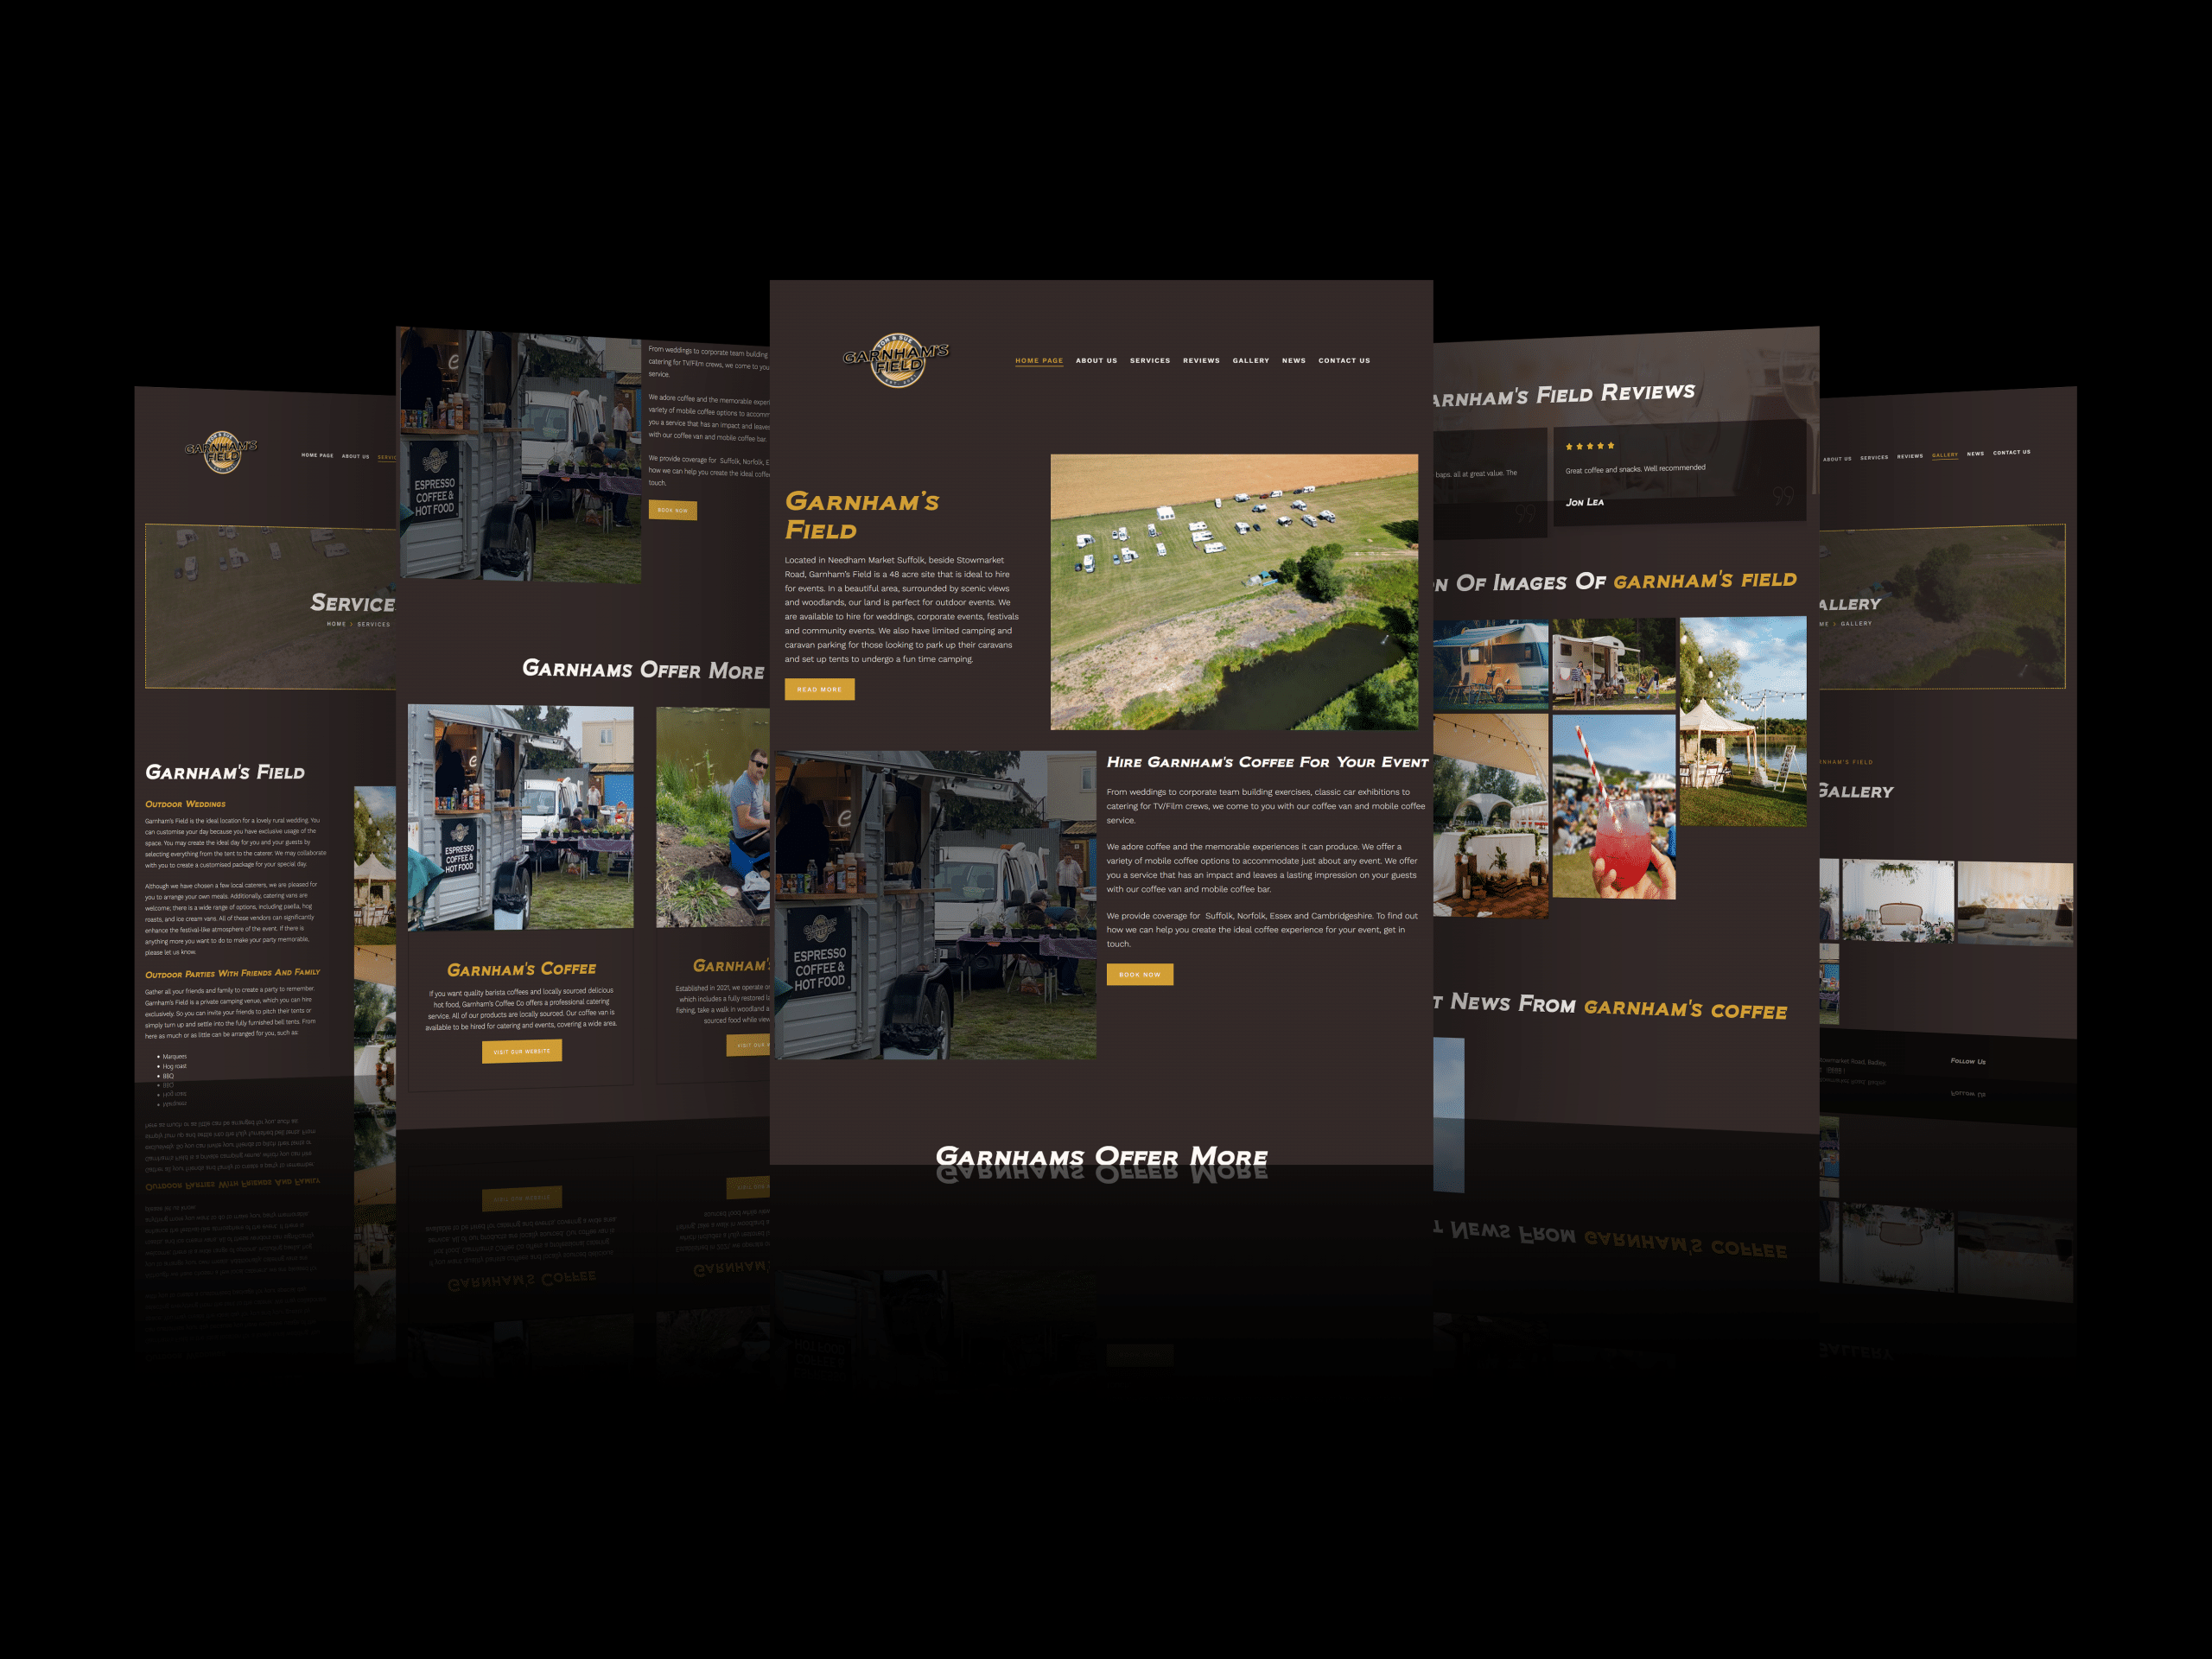 New Garnham’s Field Website Launched